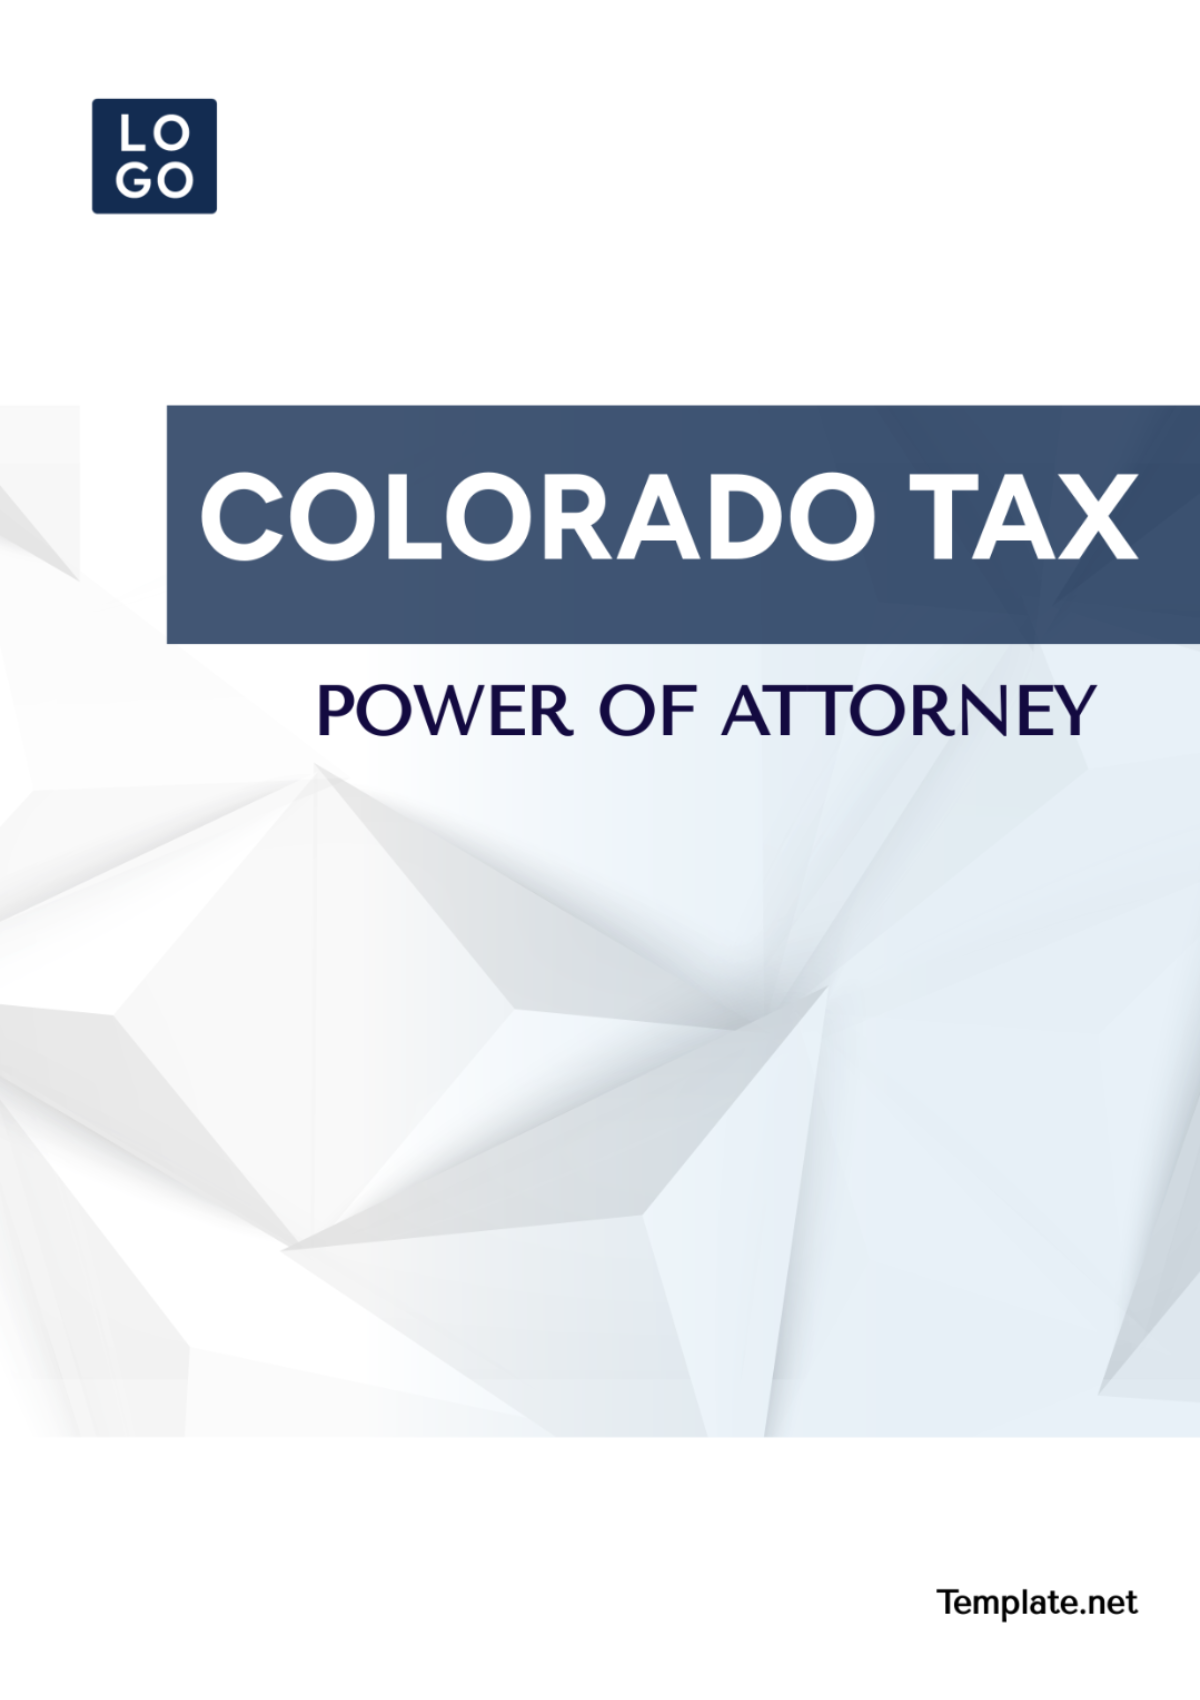 Colorado Tax Power of Attorney Template